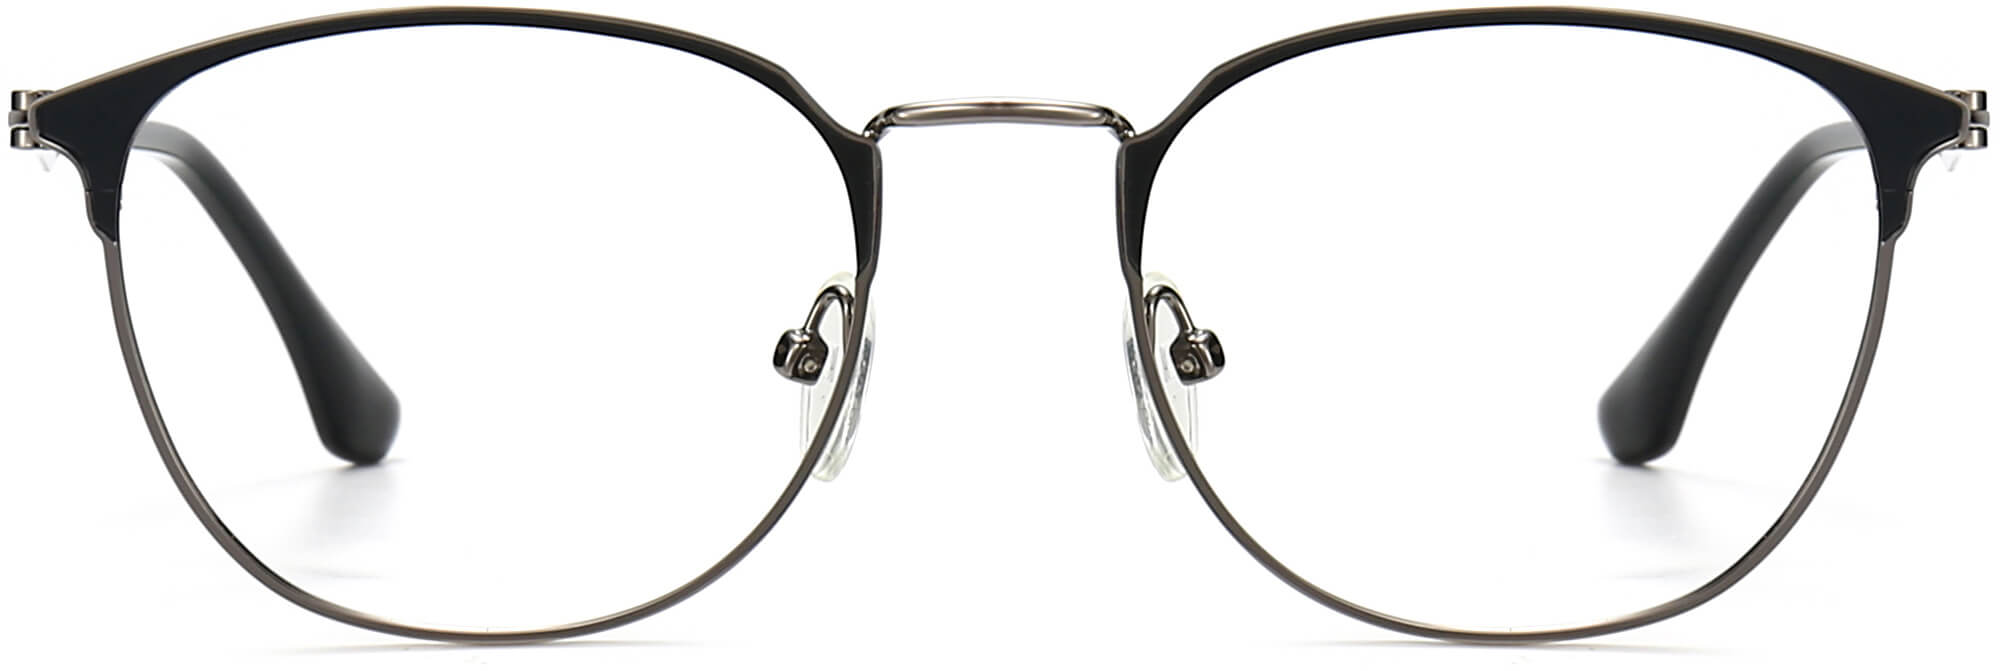 Benson Round Black Eyeglasses from ANRRI, front view